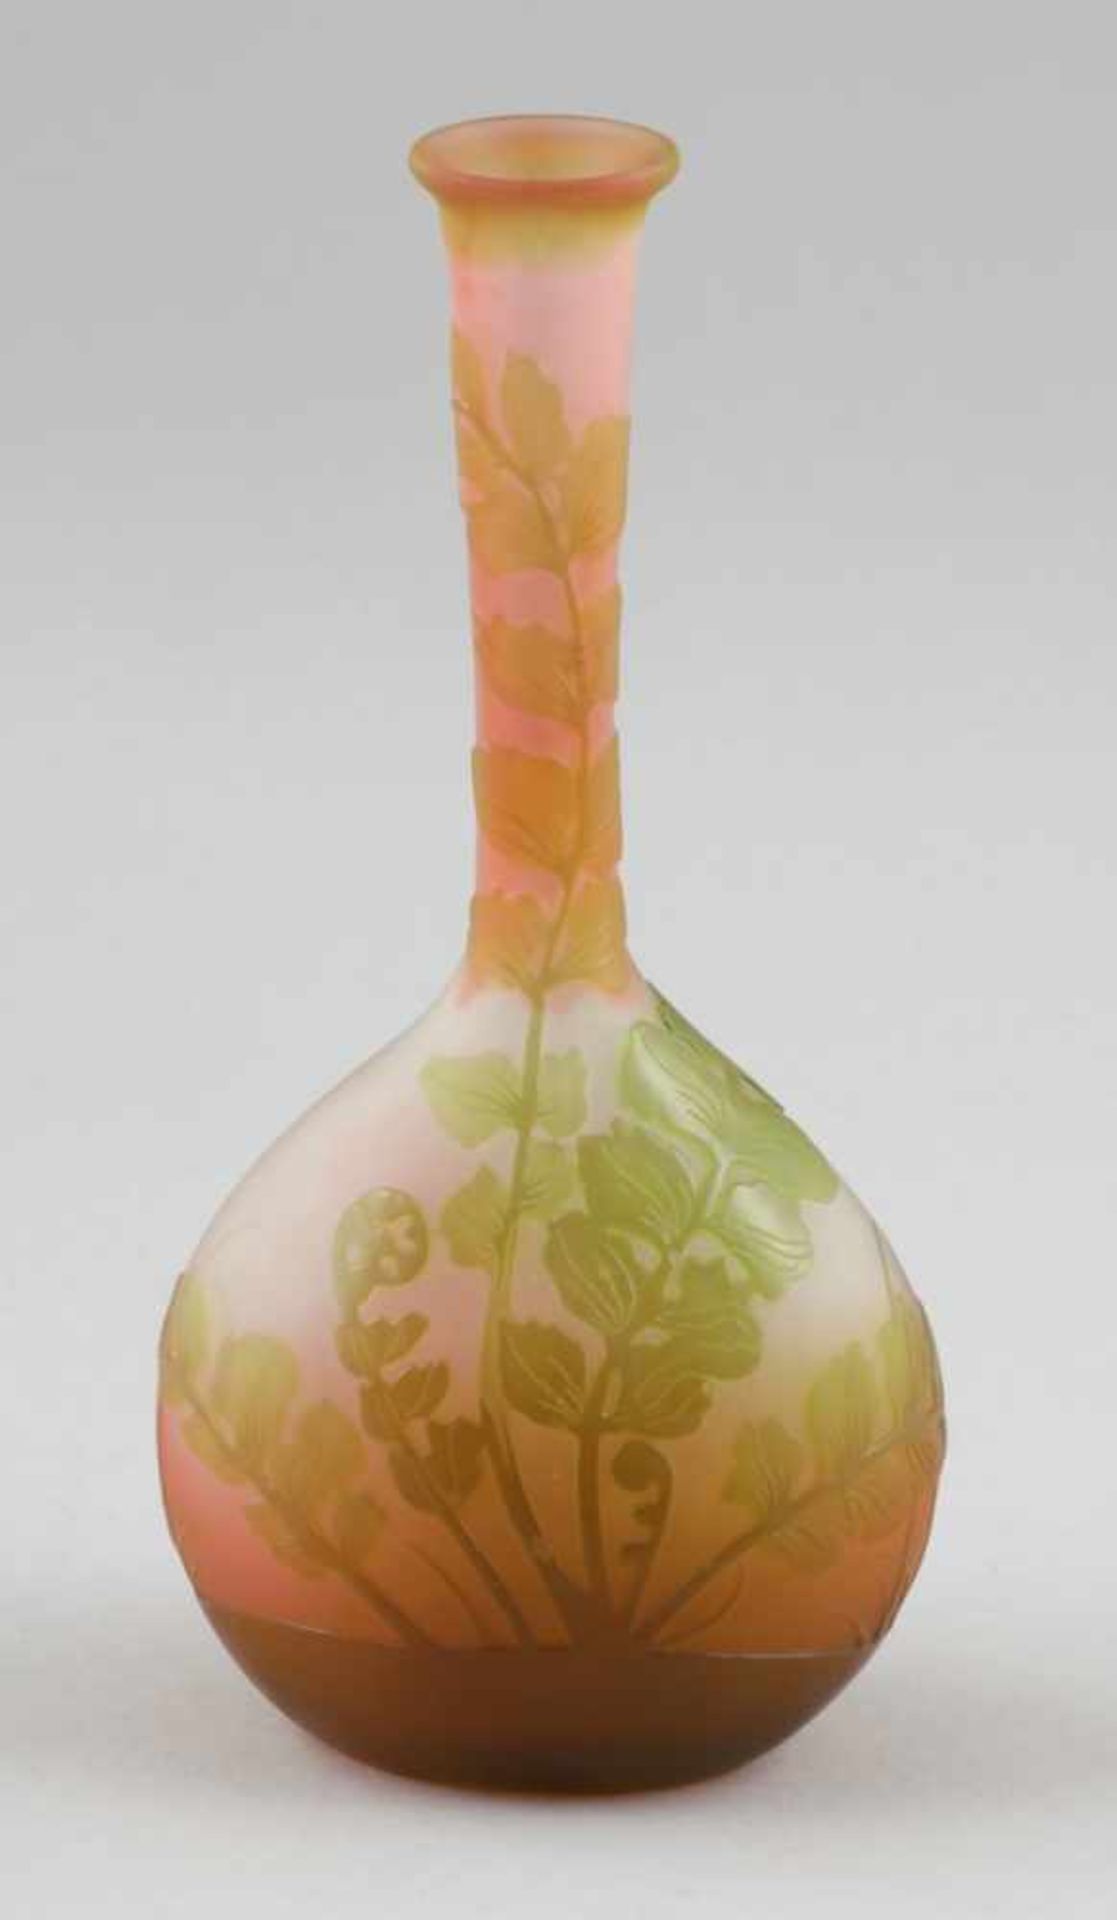 EnghalsvaseÉmile Charles Gallé, Nancy 1908-1914. - Farne - Opakweißes Glas, mit rosafarbenen